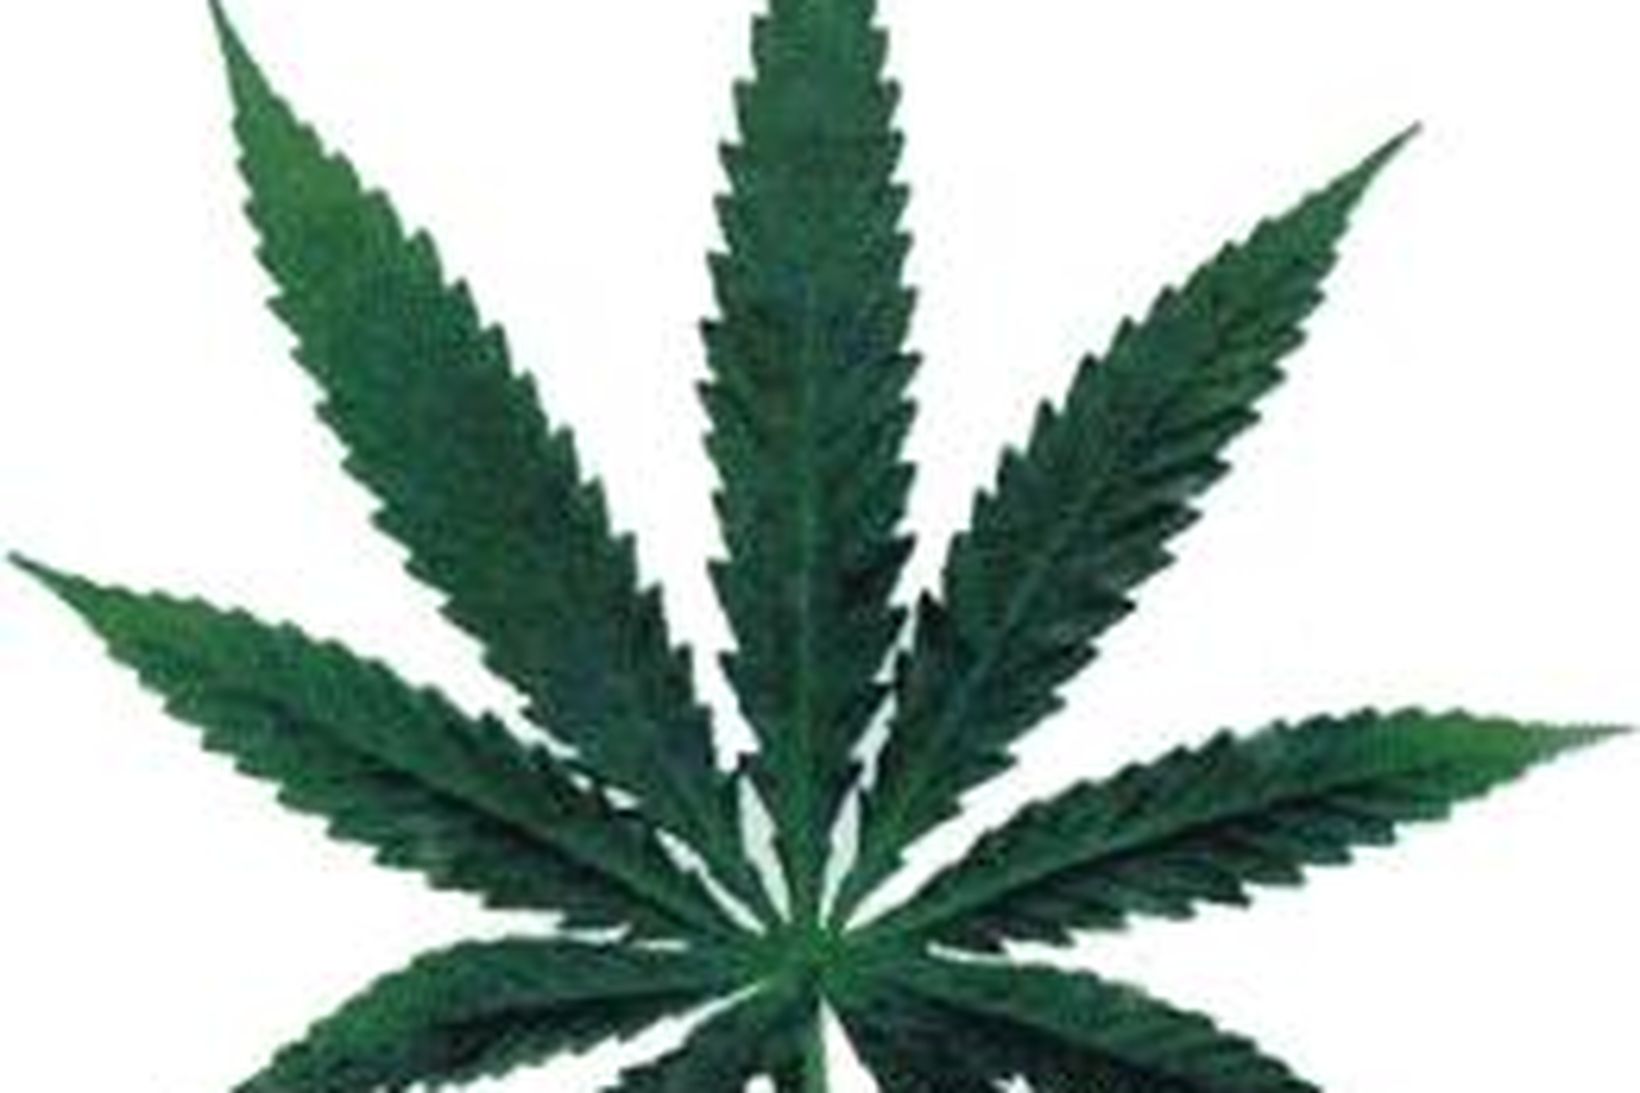 Kannabislauf